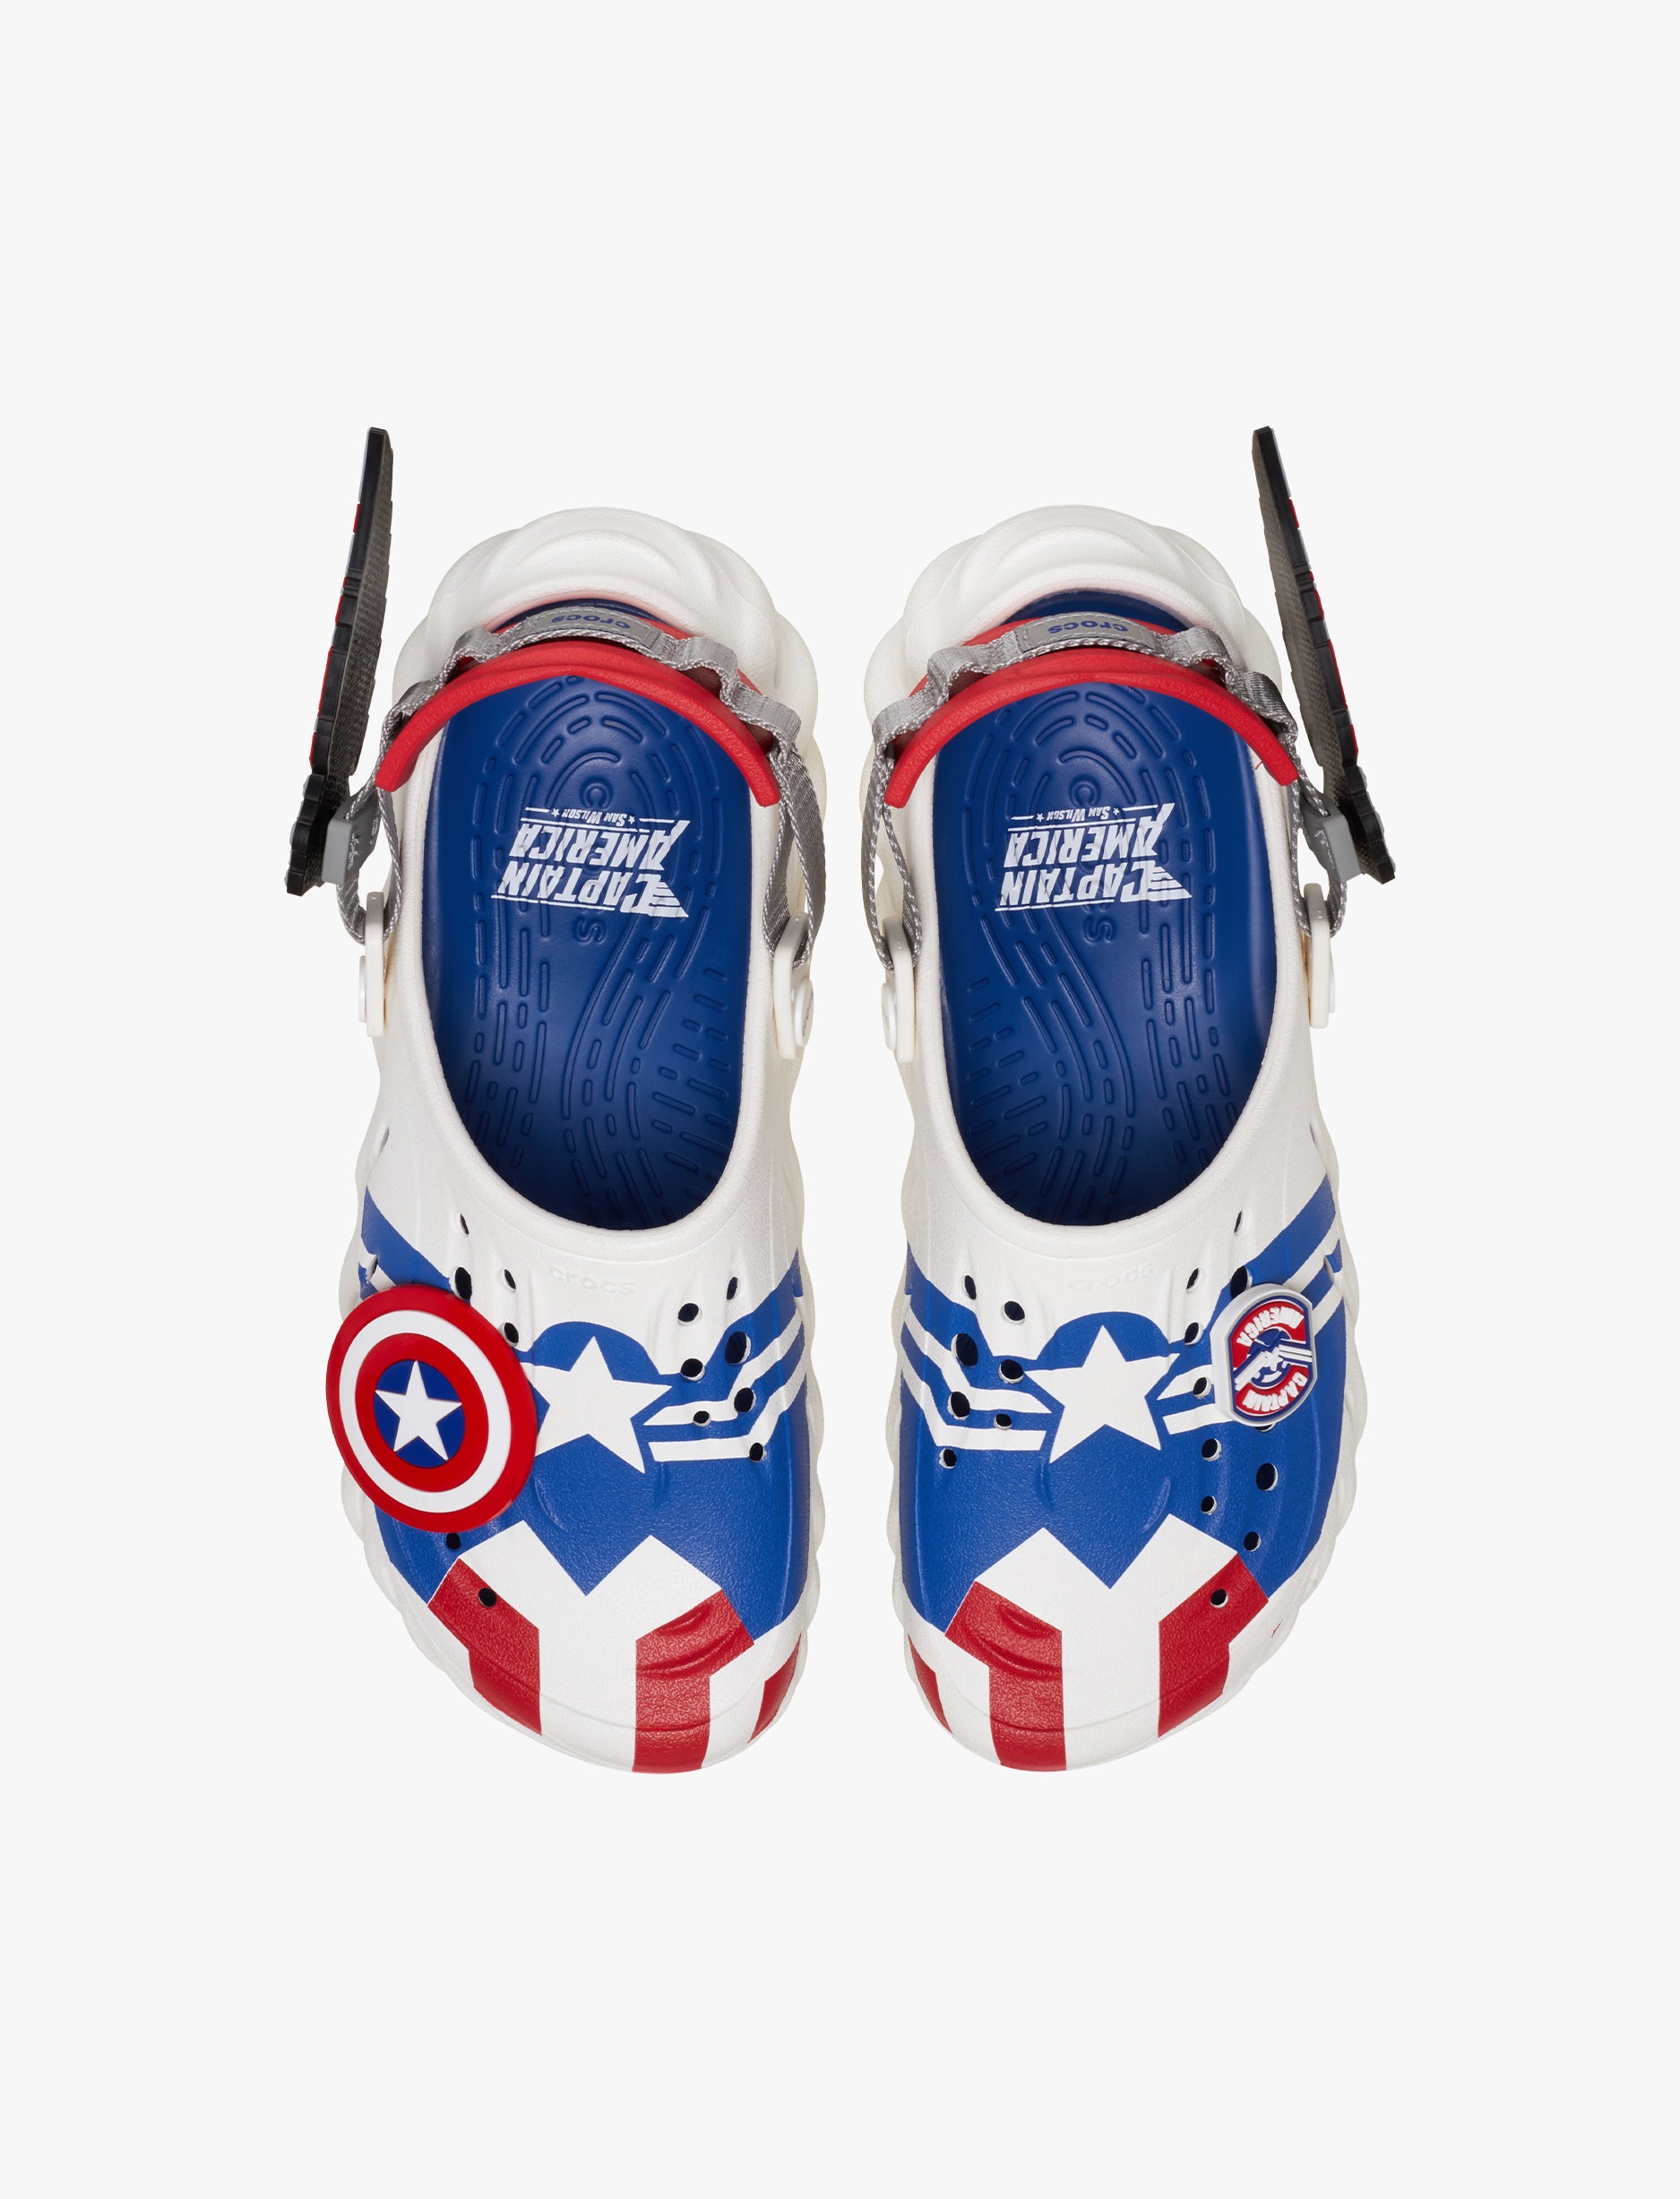 Crocs Captain America Echo Clog -  כפכפי אקו קלוג קרוקס קפטן אמריקה בצבע לבן